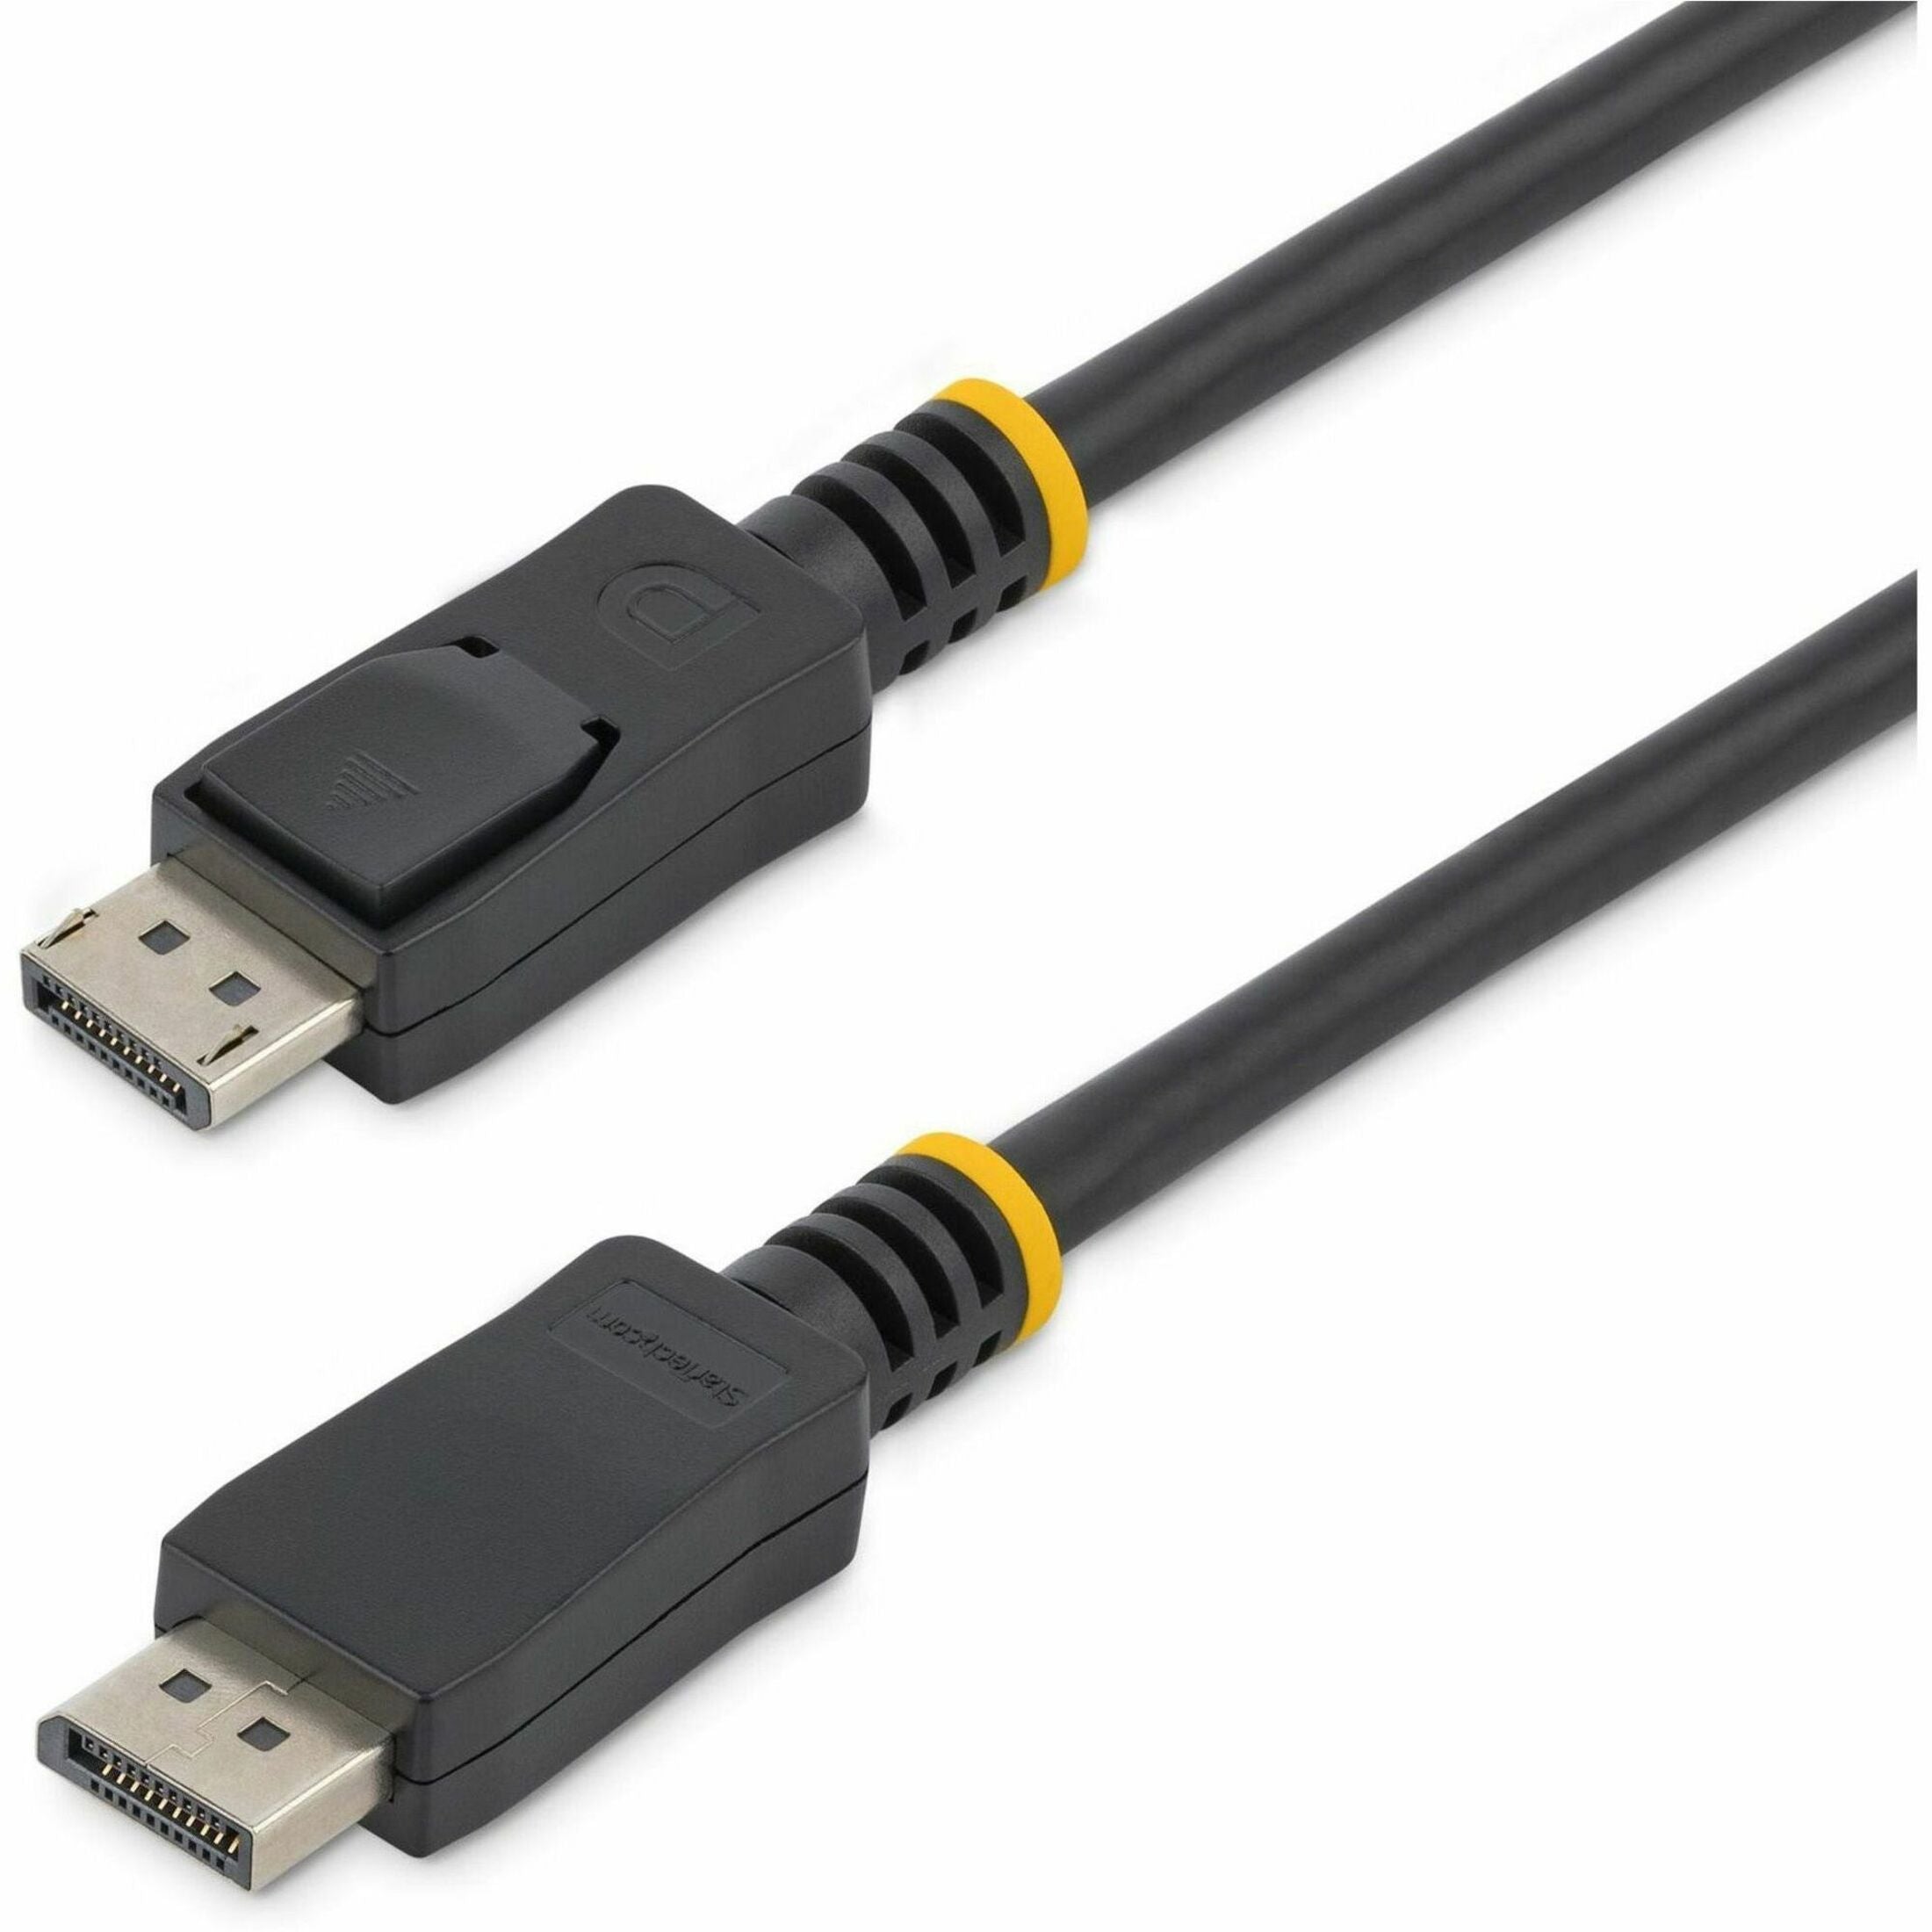 StarTech.com DISPLPORT1L 1 ft Kurzes DisplayPort 1.2 Kabel mit Verriegelungen M/M 4k Video Kabel